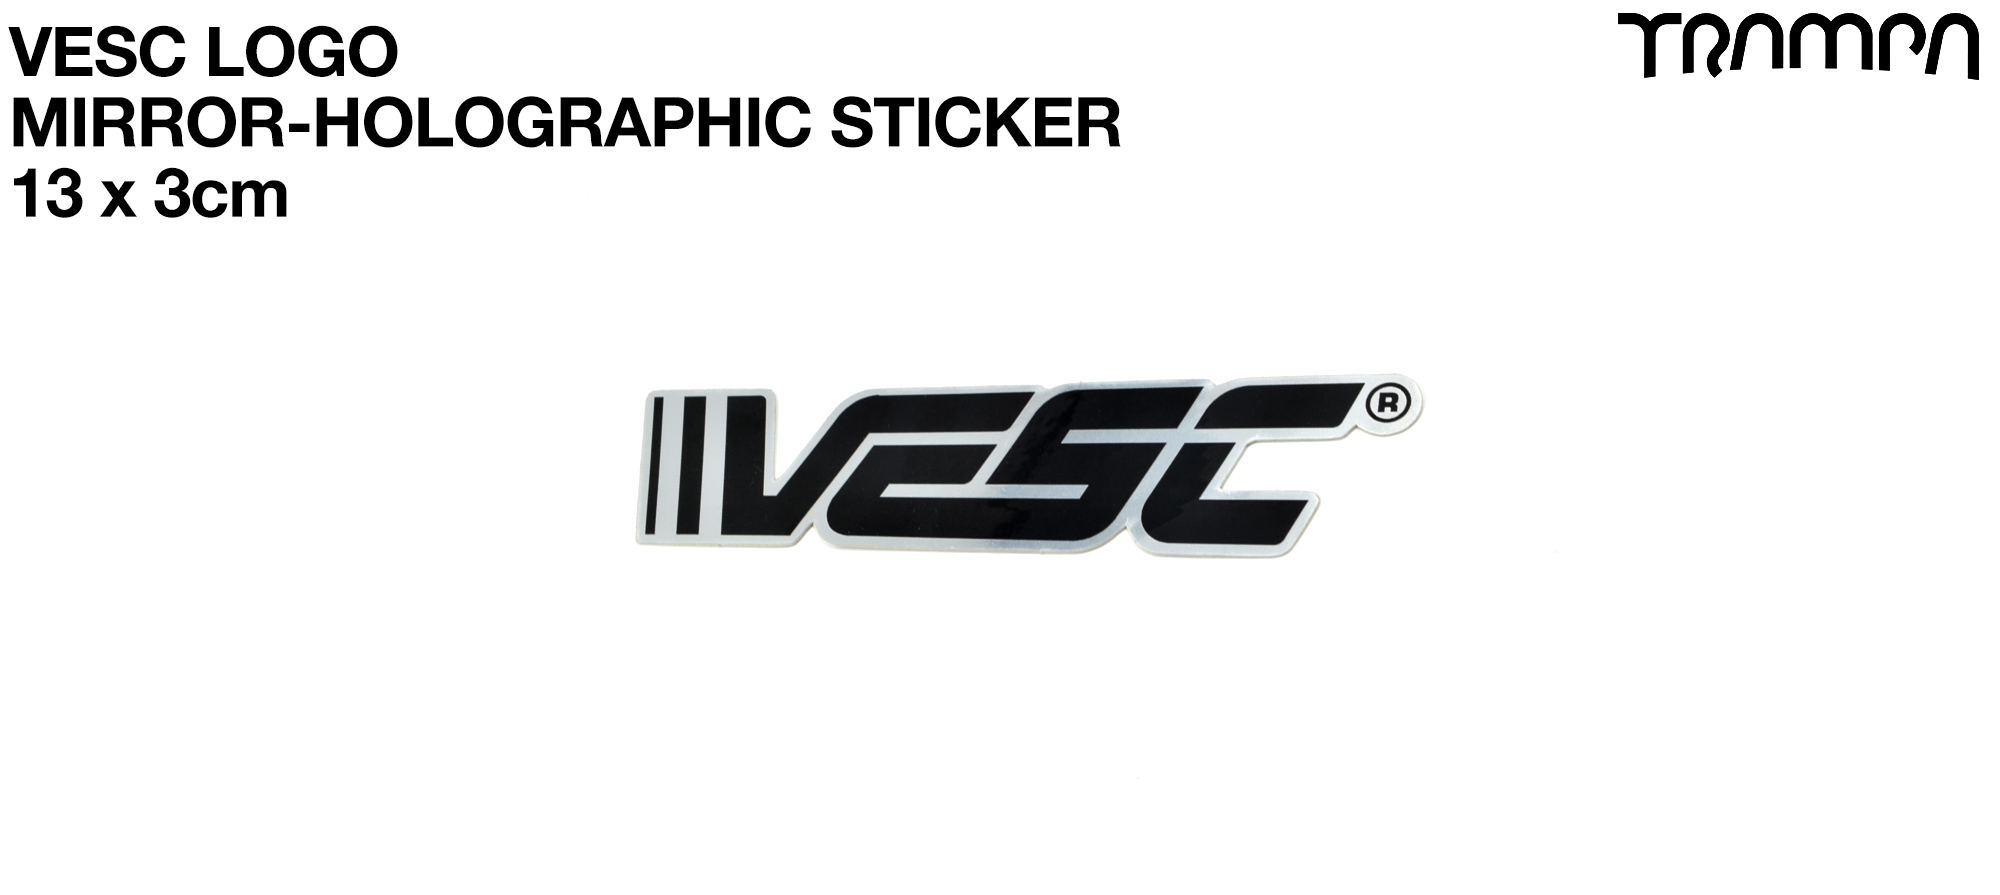 4x Holographic VESC Sticker (+£1)